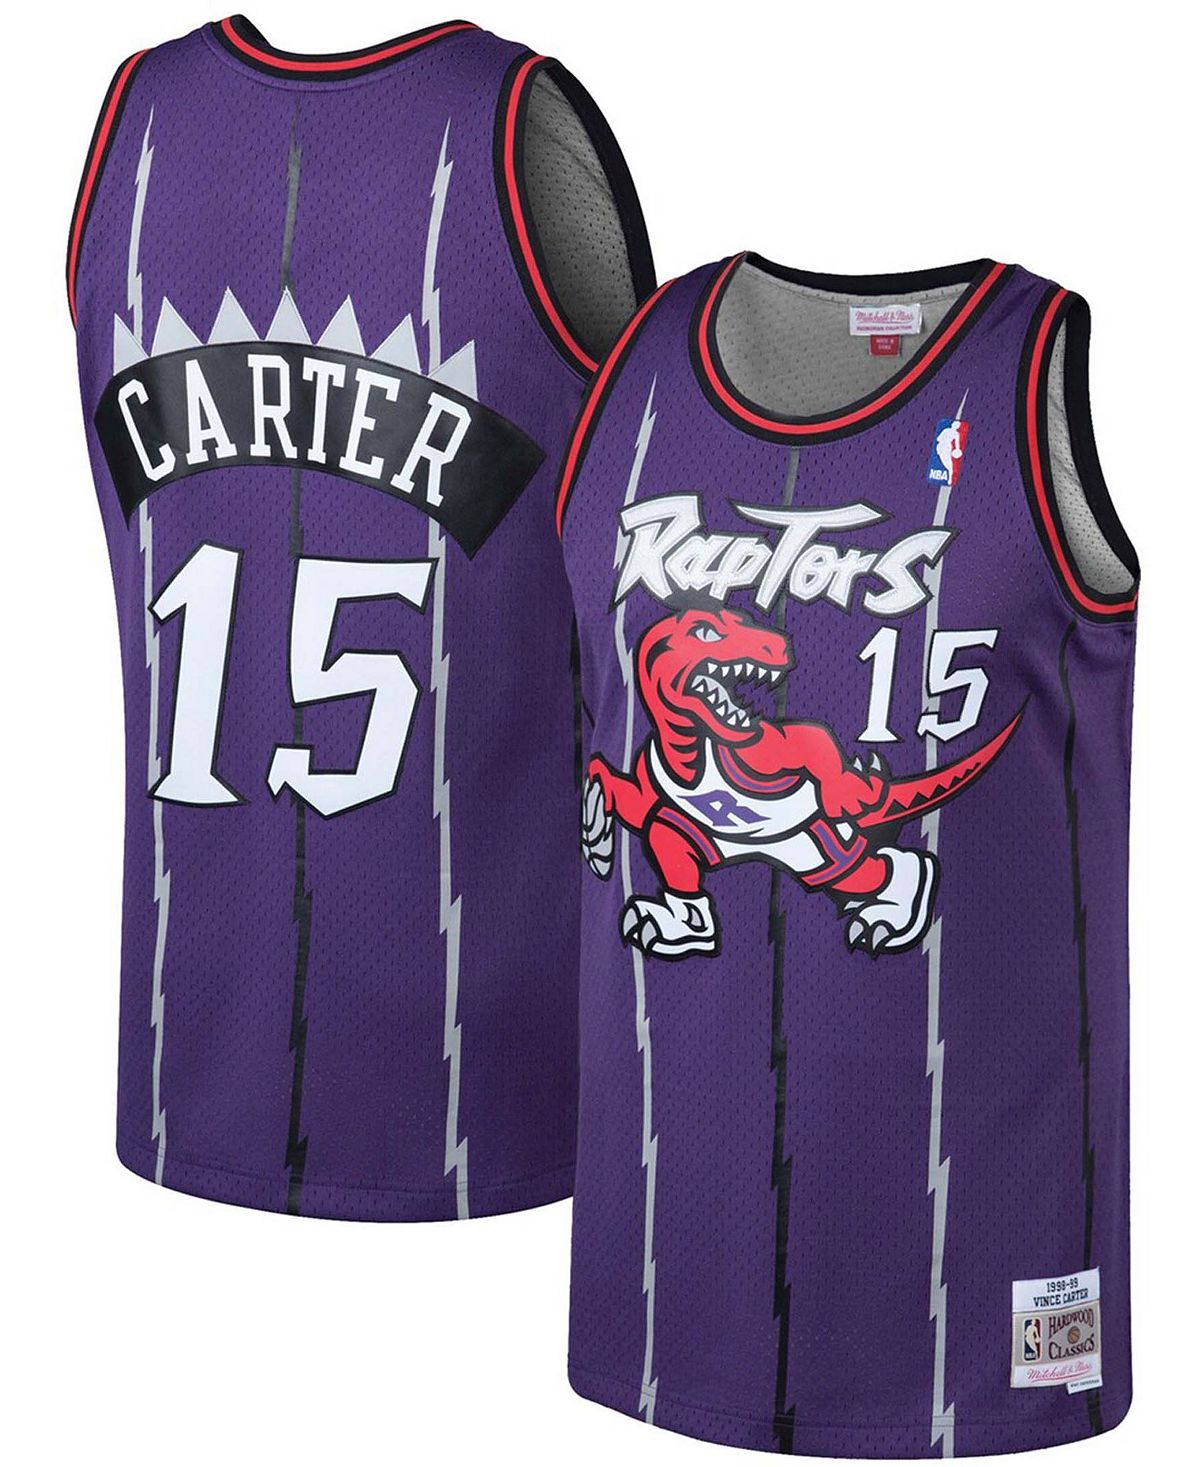 Мужская джерси vince carter purple toronto raptors 1998-99 hardwood classics swingman Mitchell & Ness, фиолетовый цена и фото